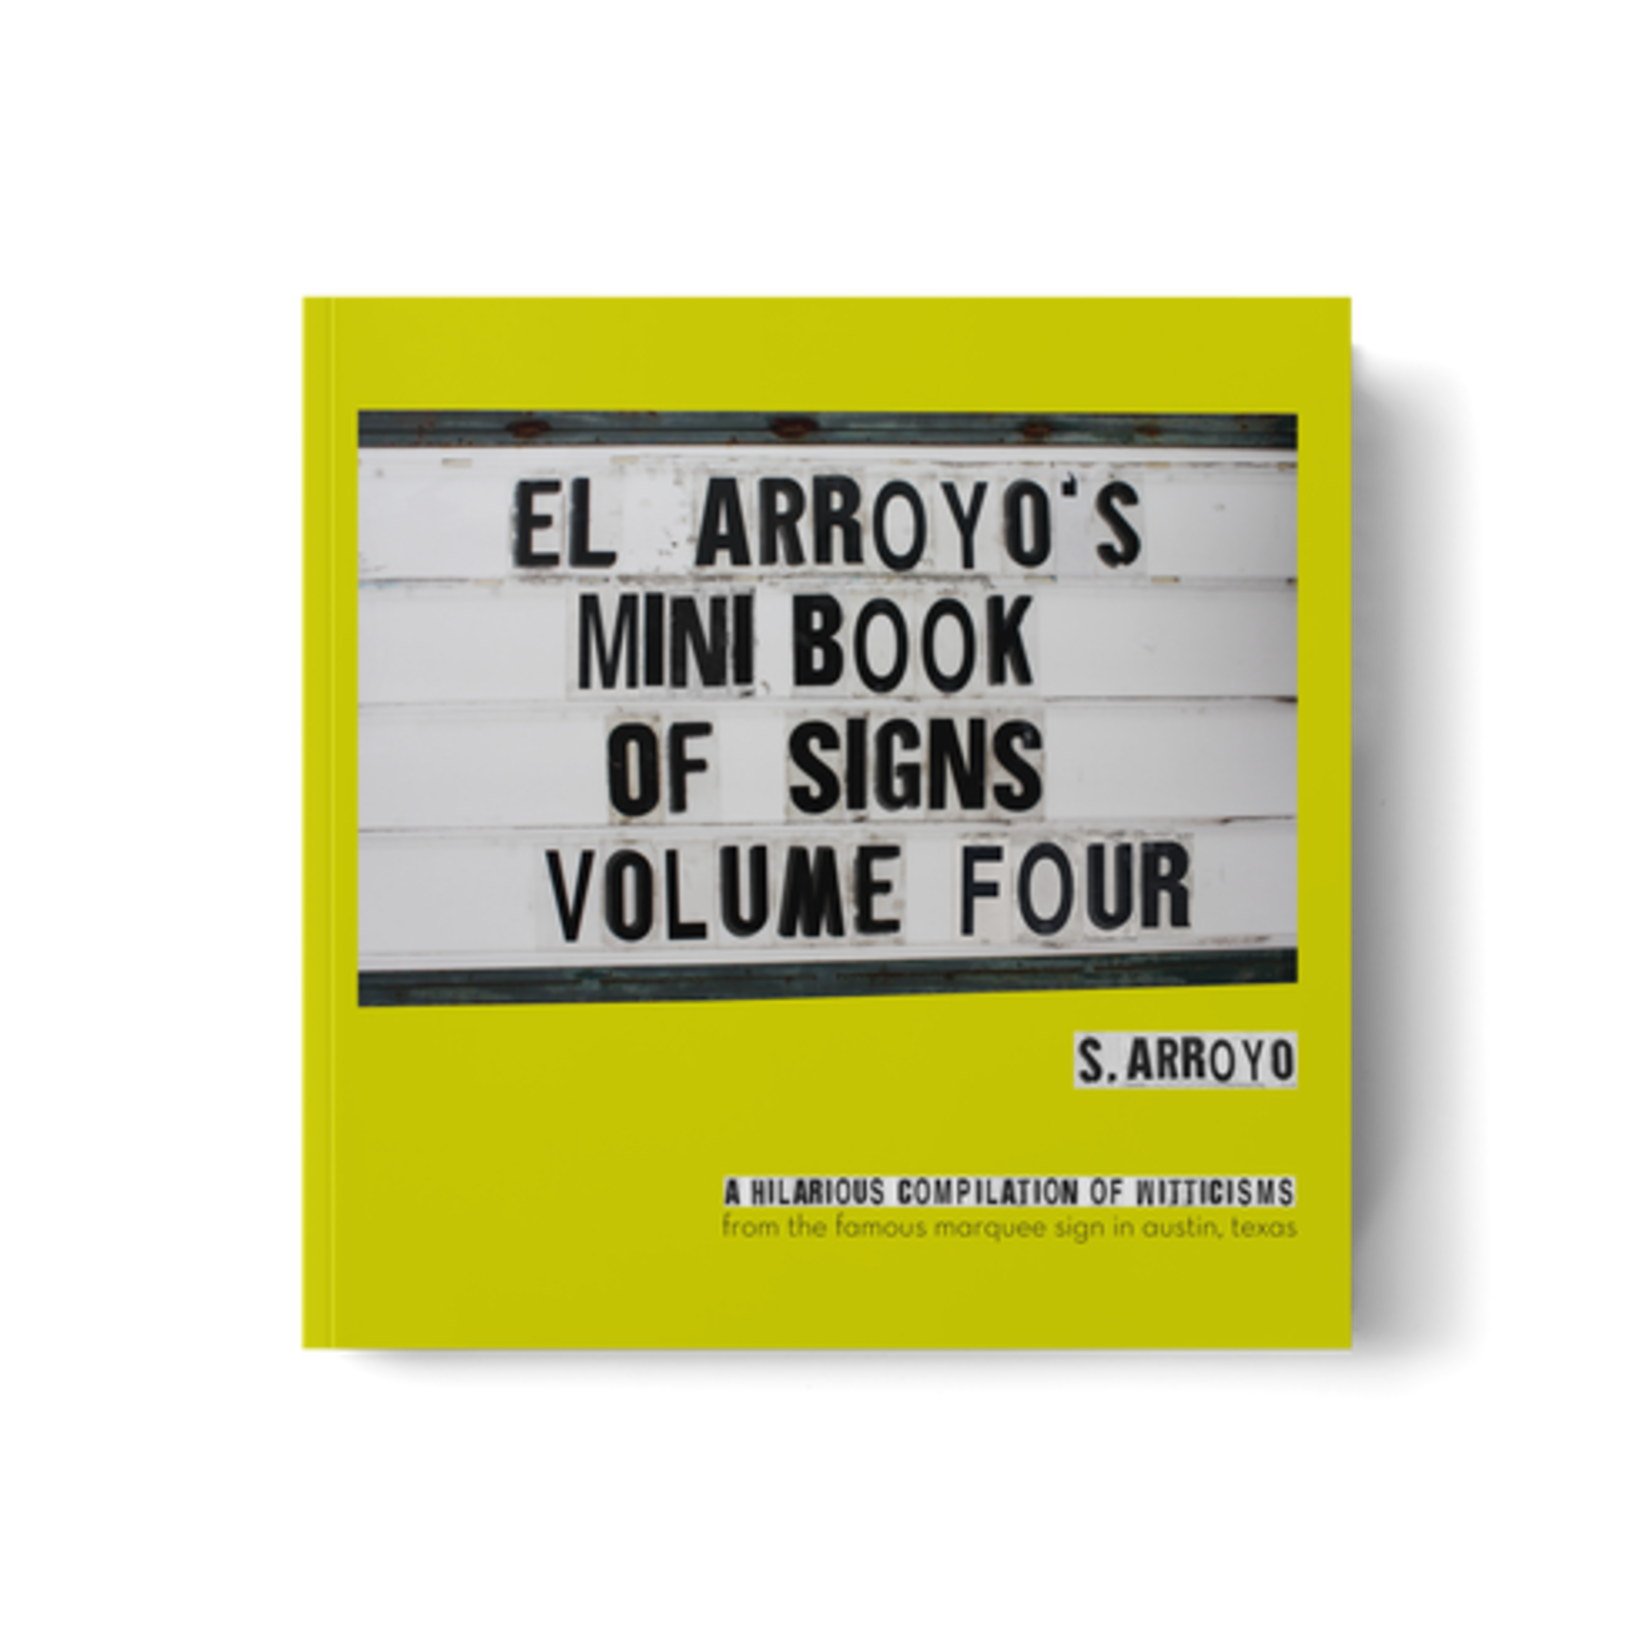 El Arroyo El Arroyo's Mini Book of Signs Vol. 4